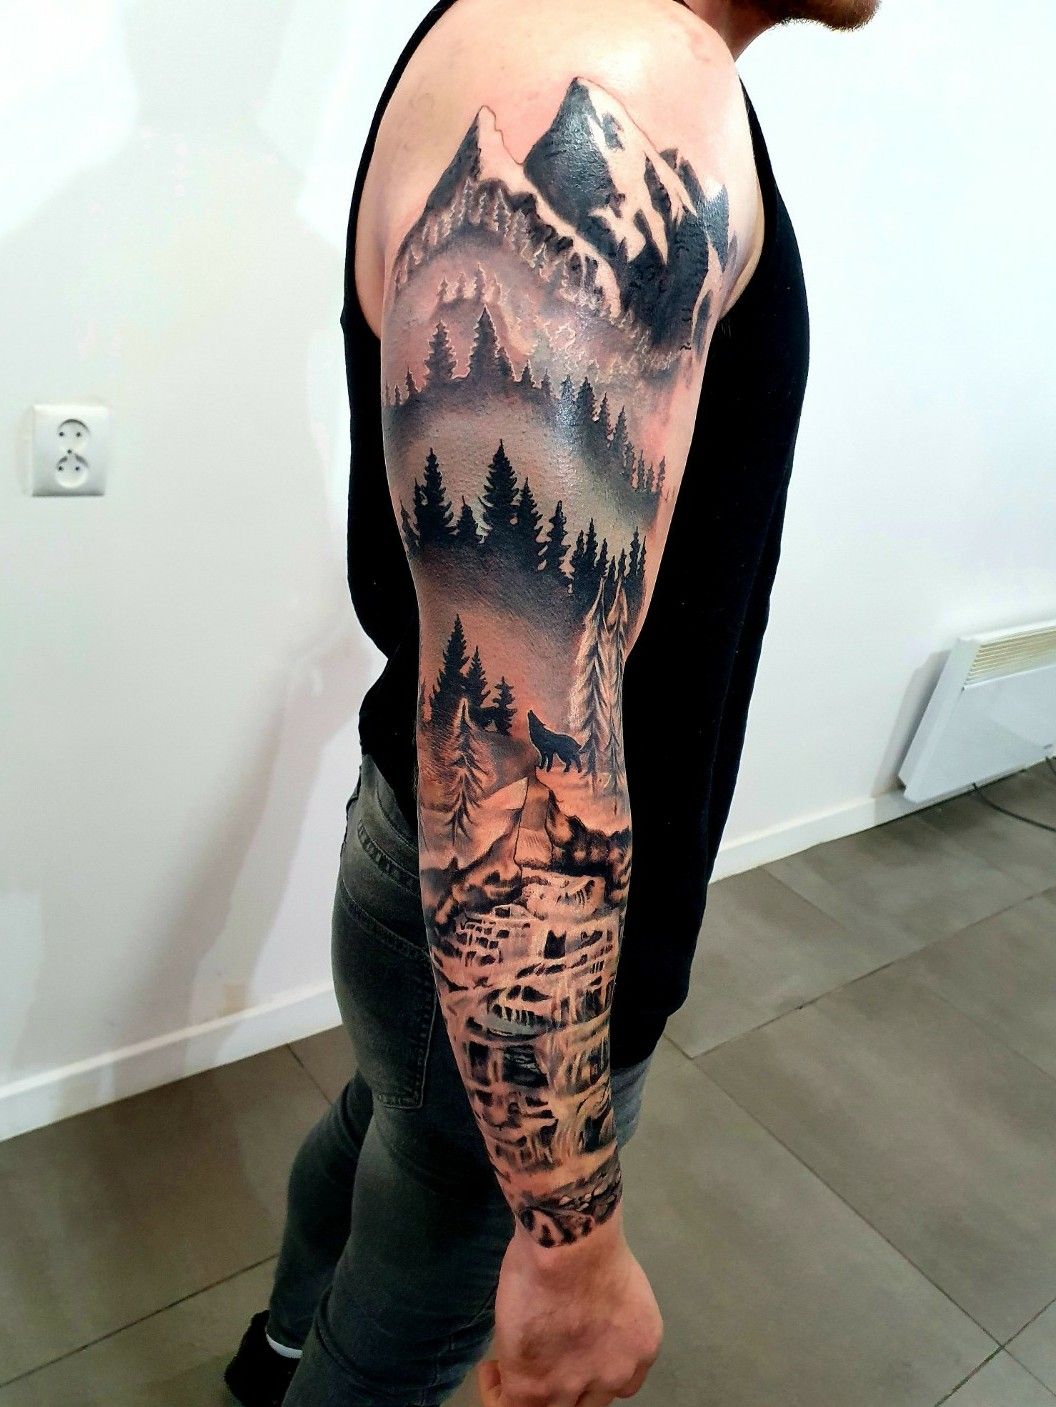 Lovely Exterior Of The Forearm Tattoos | Pusula dövmesi, Dövme, Karizmatik  dövmeler